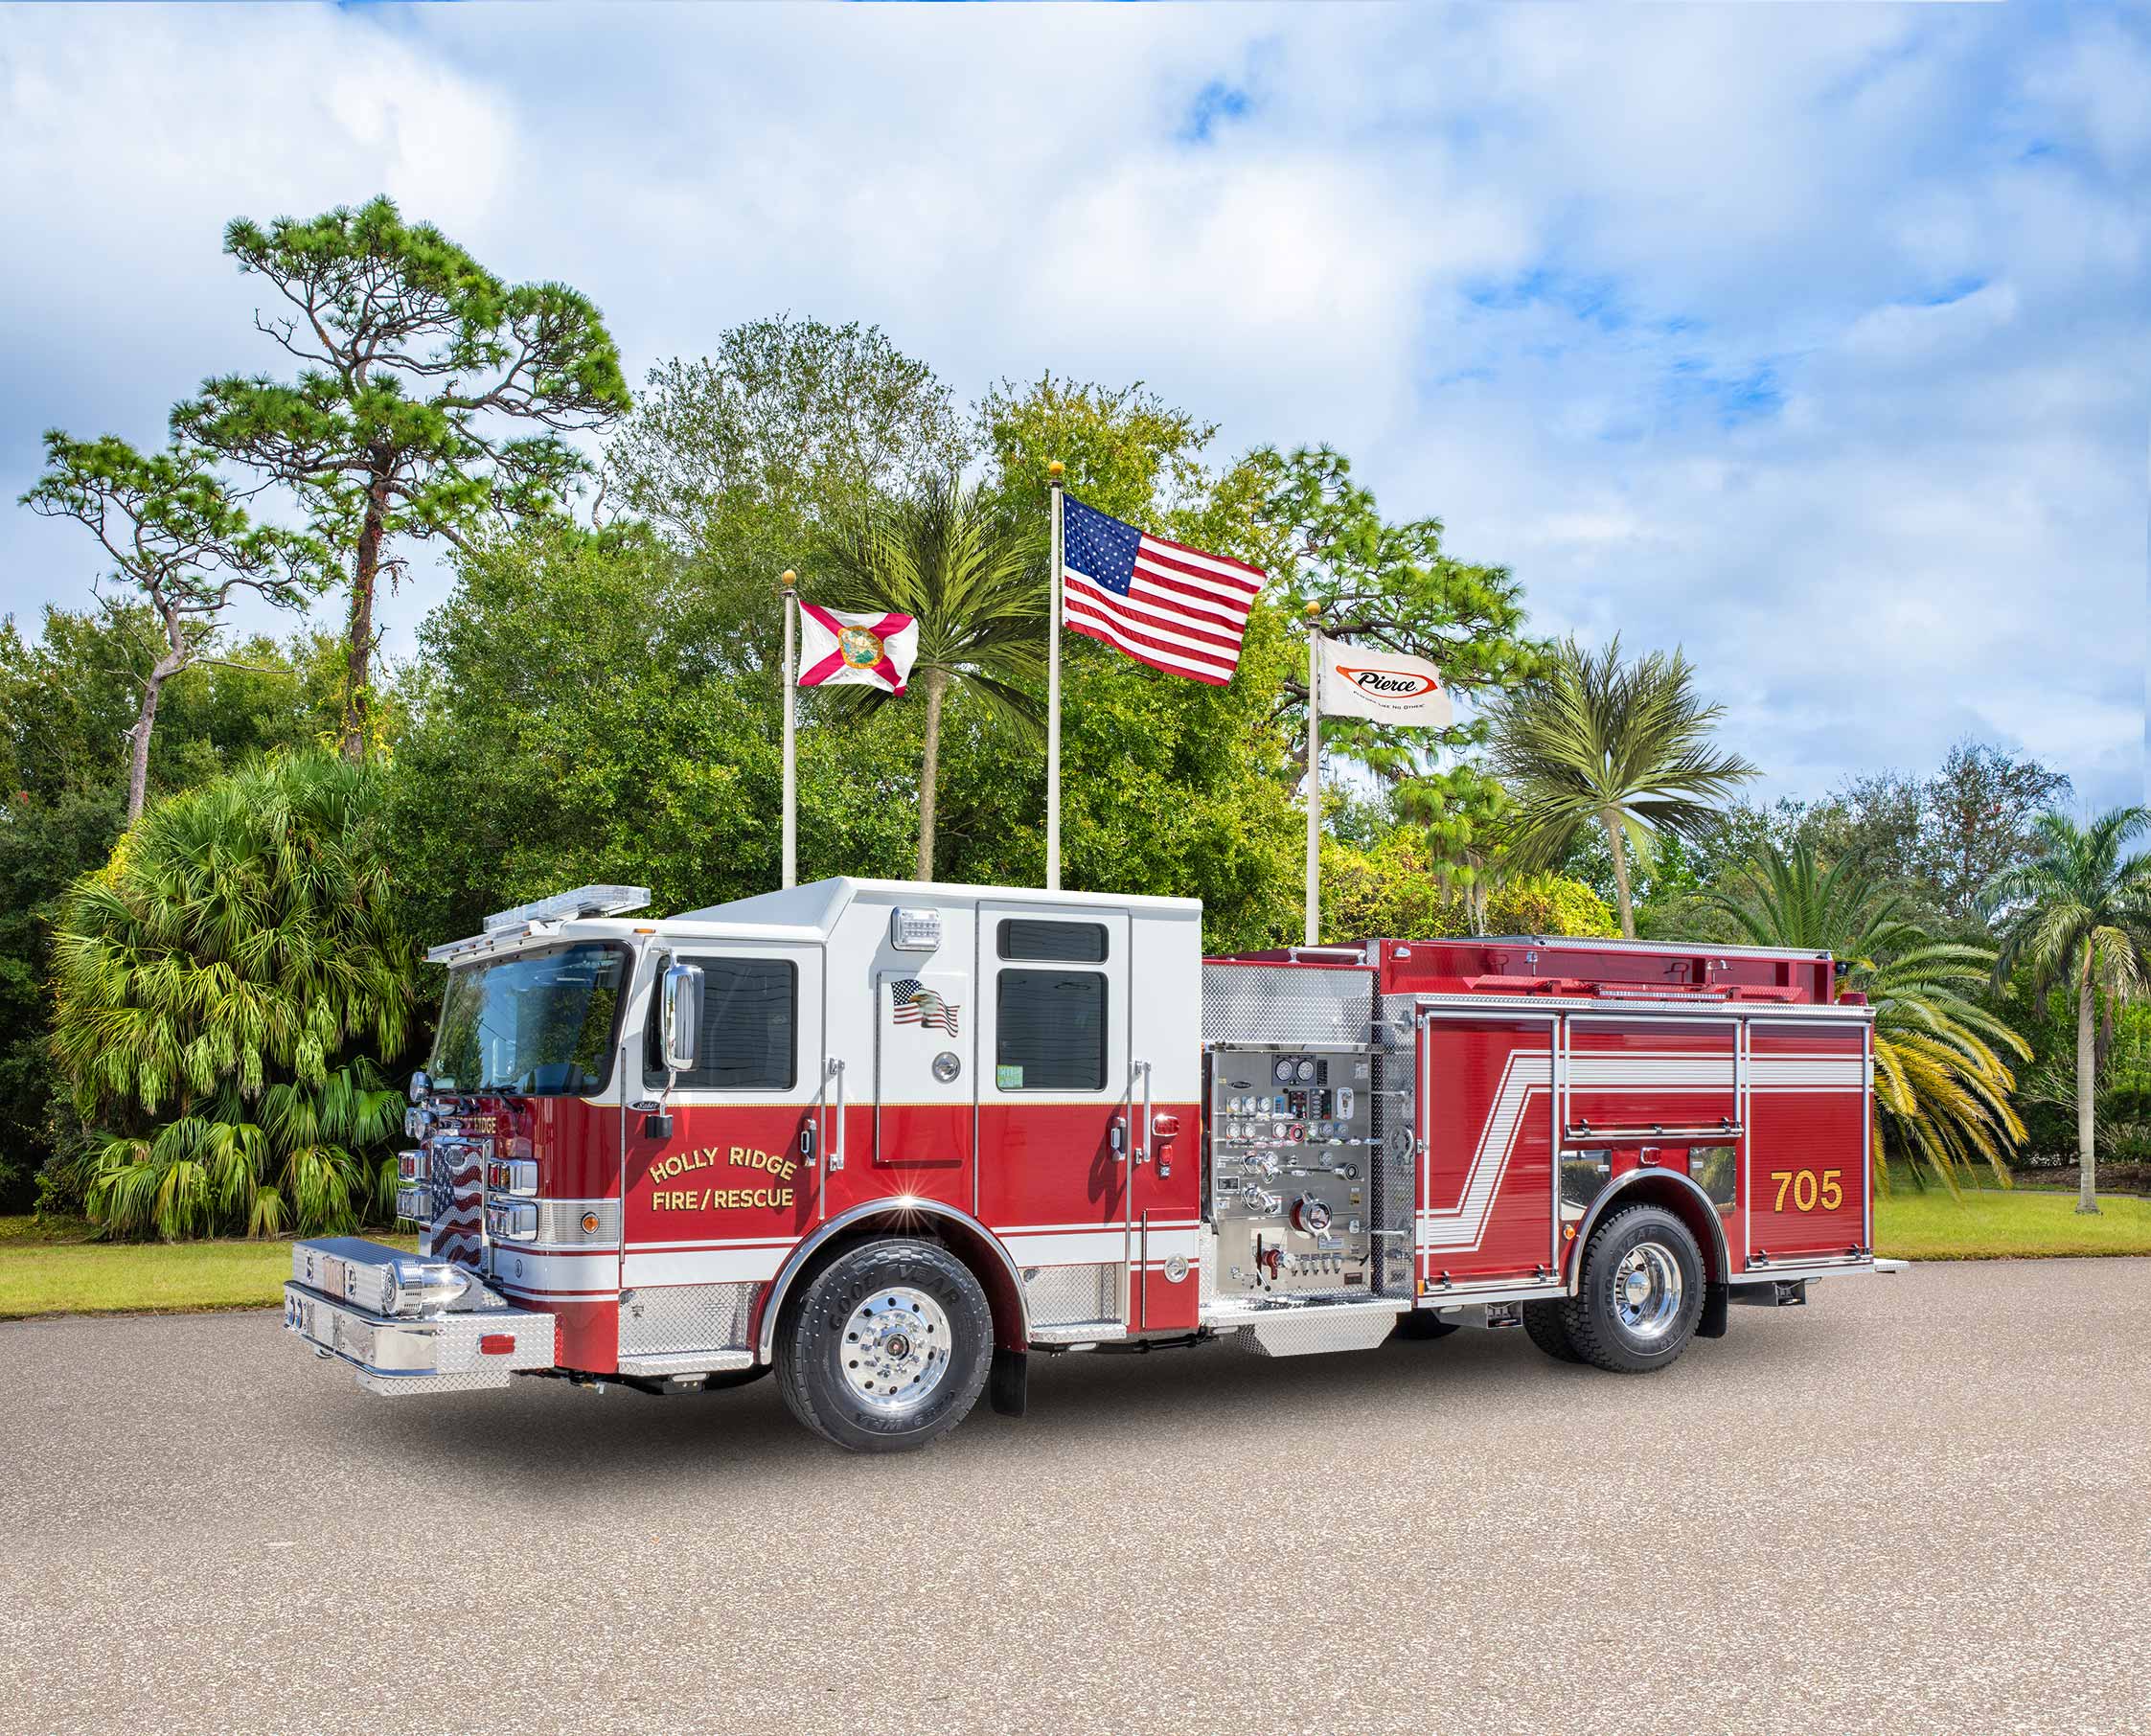 Holly Ridge Fire & Rescue Pumper